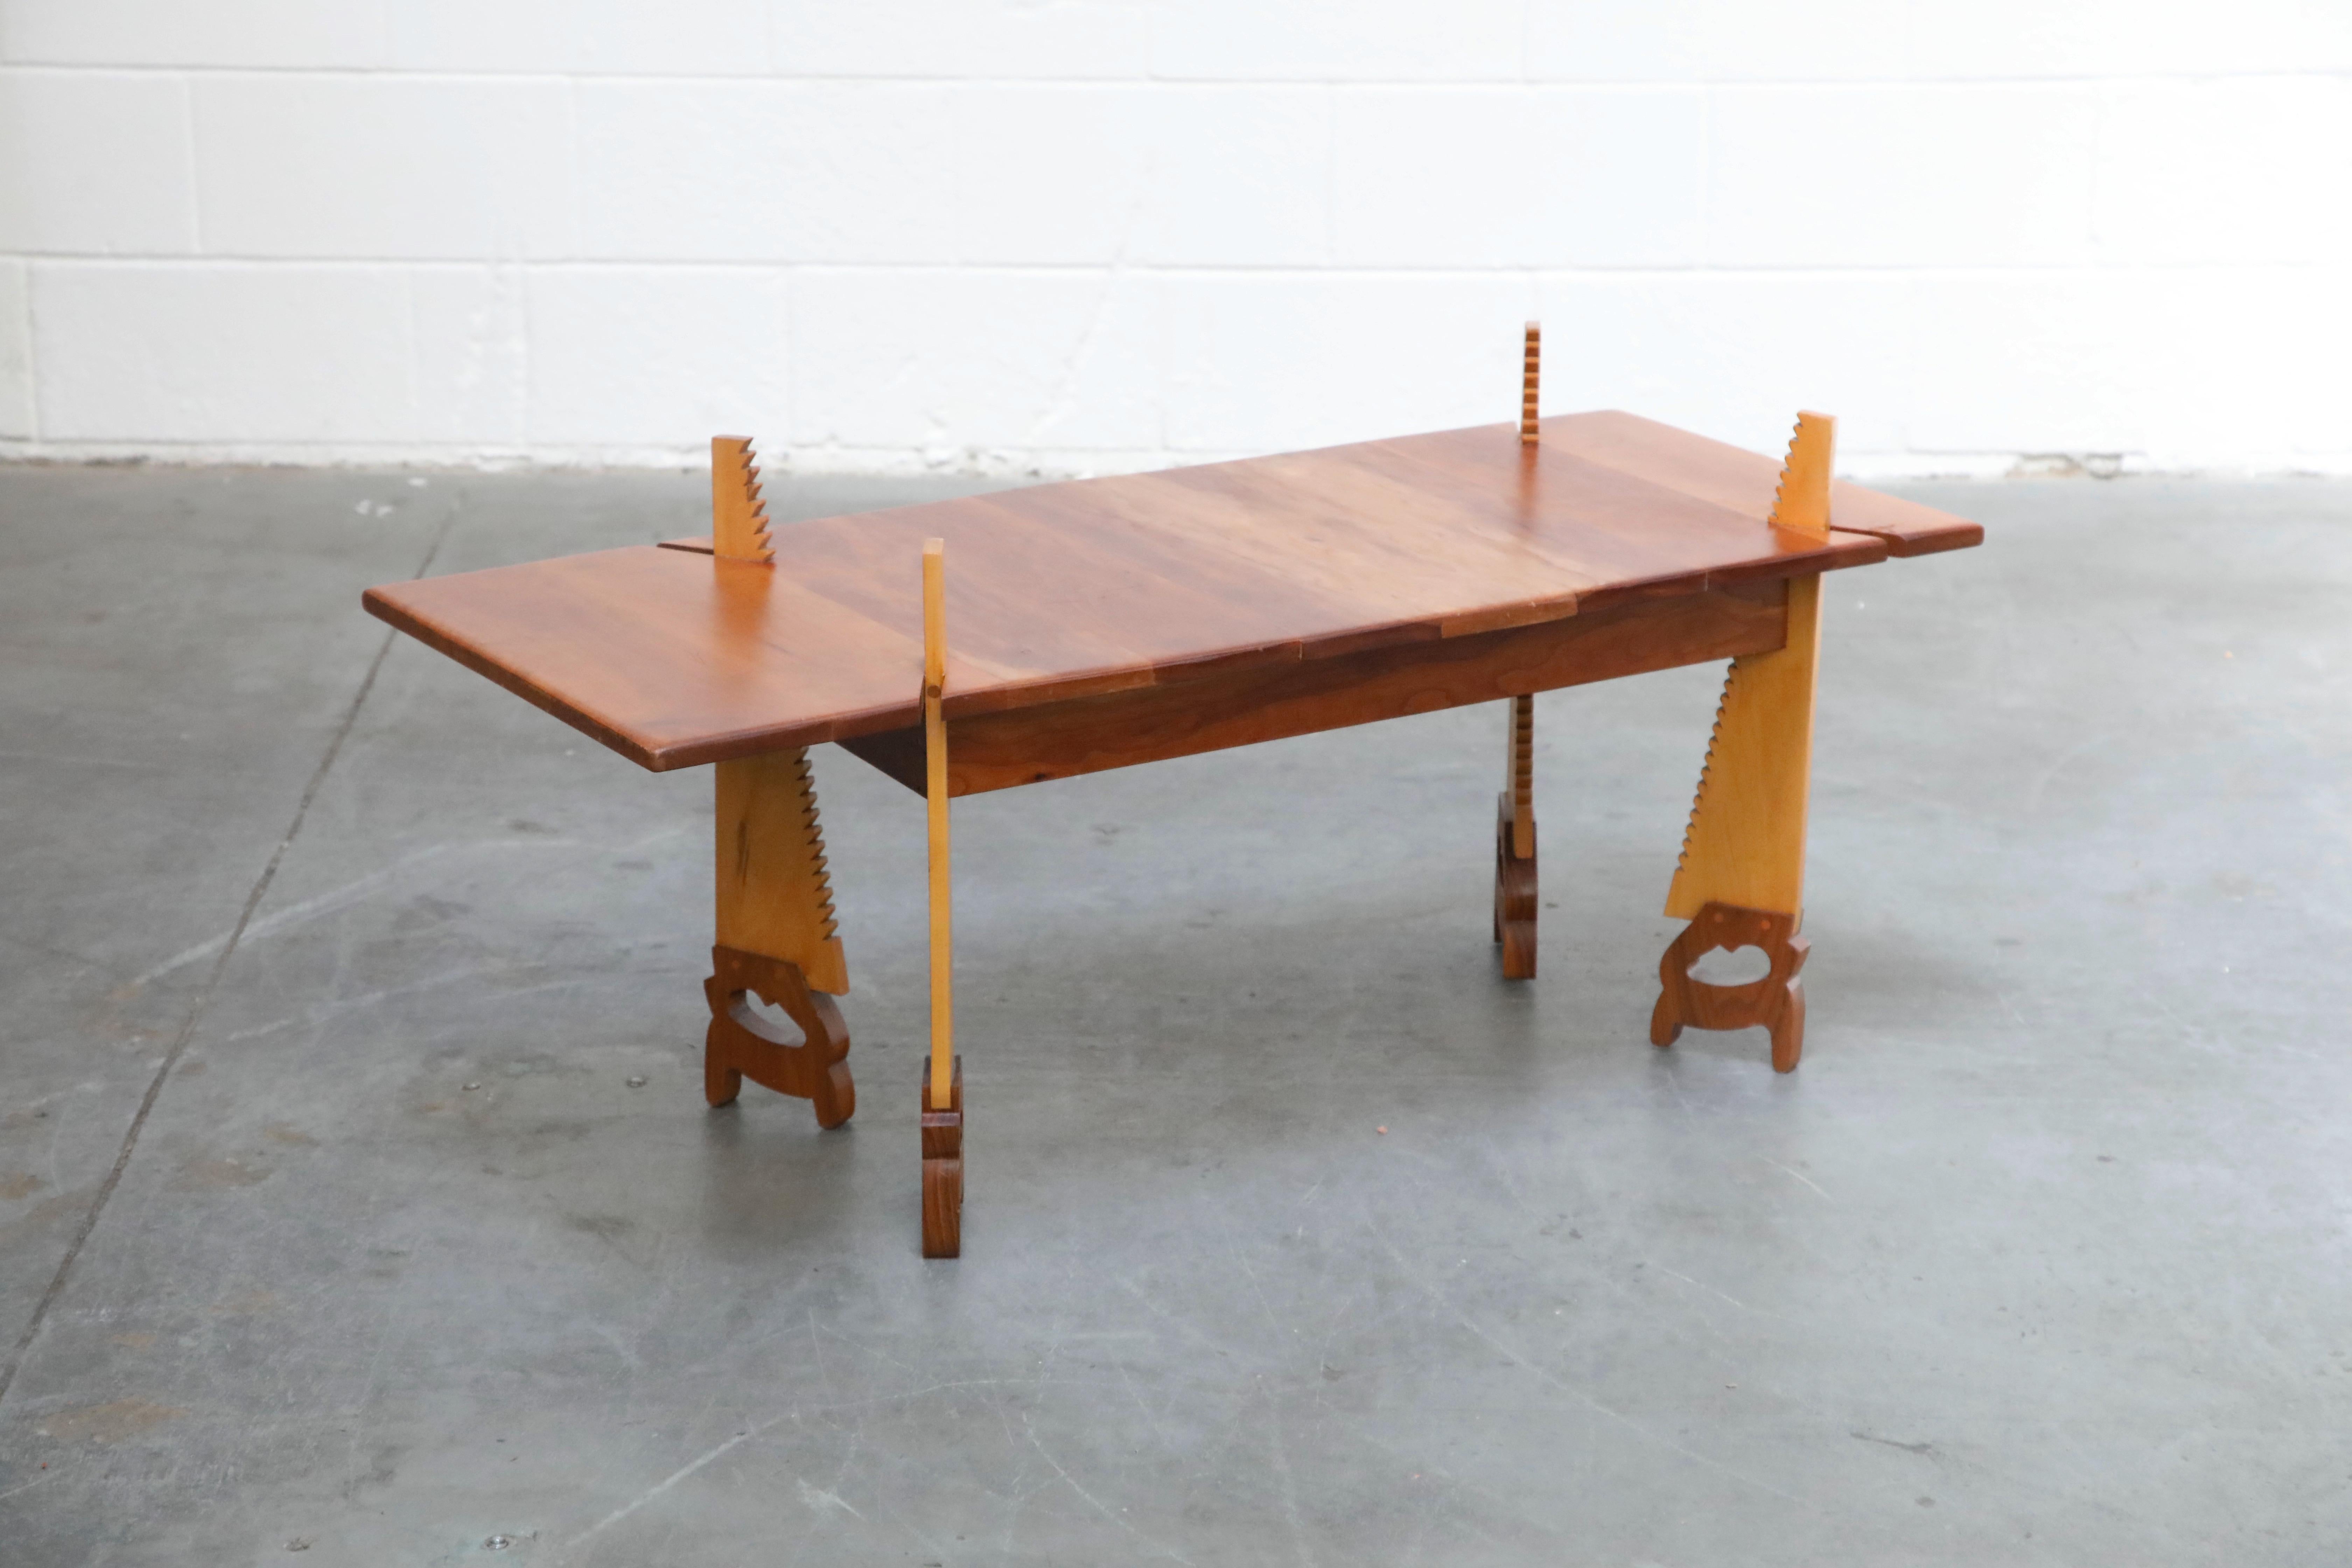 craftsman table legs